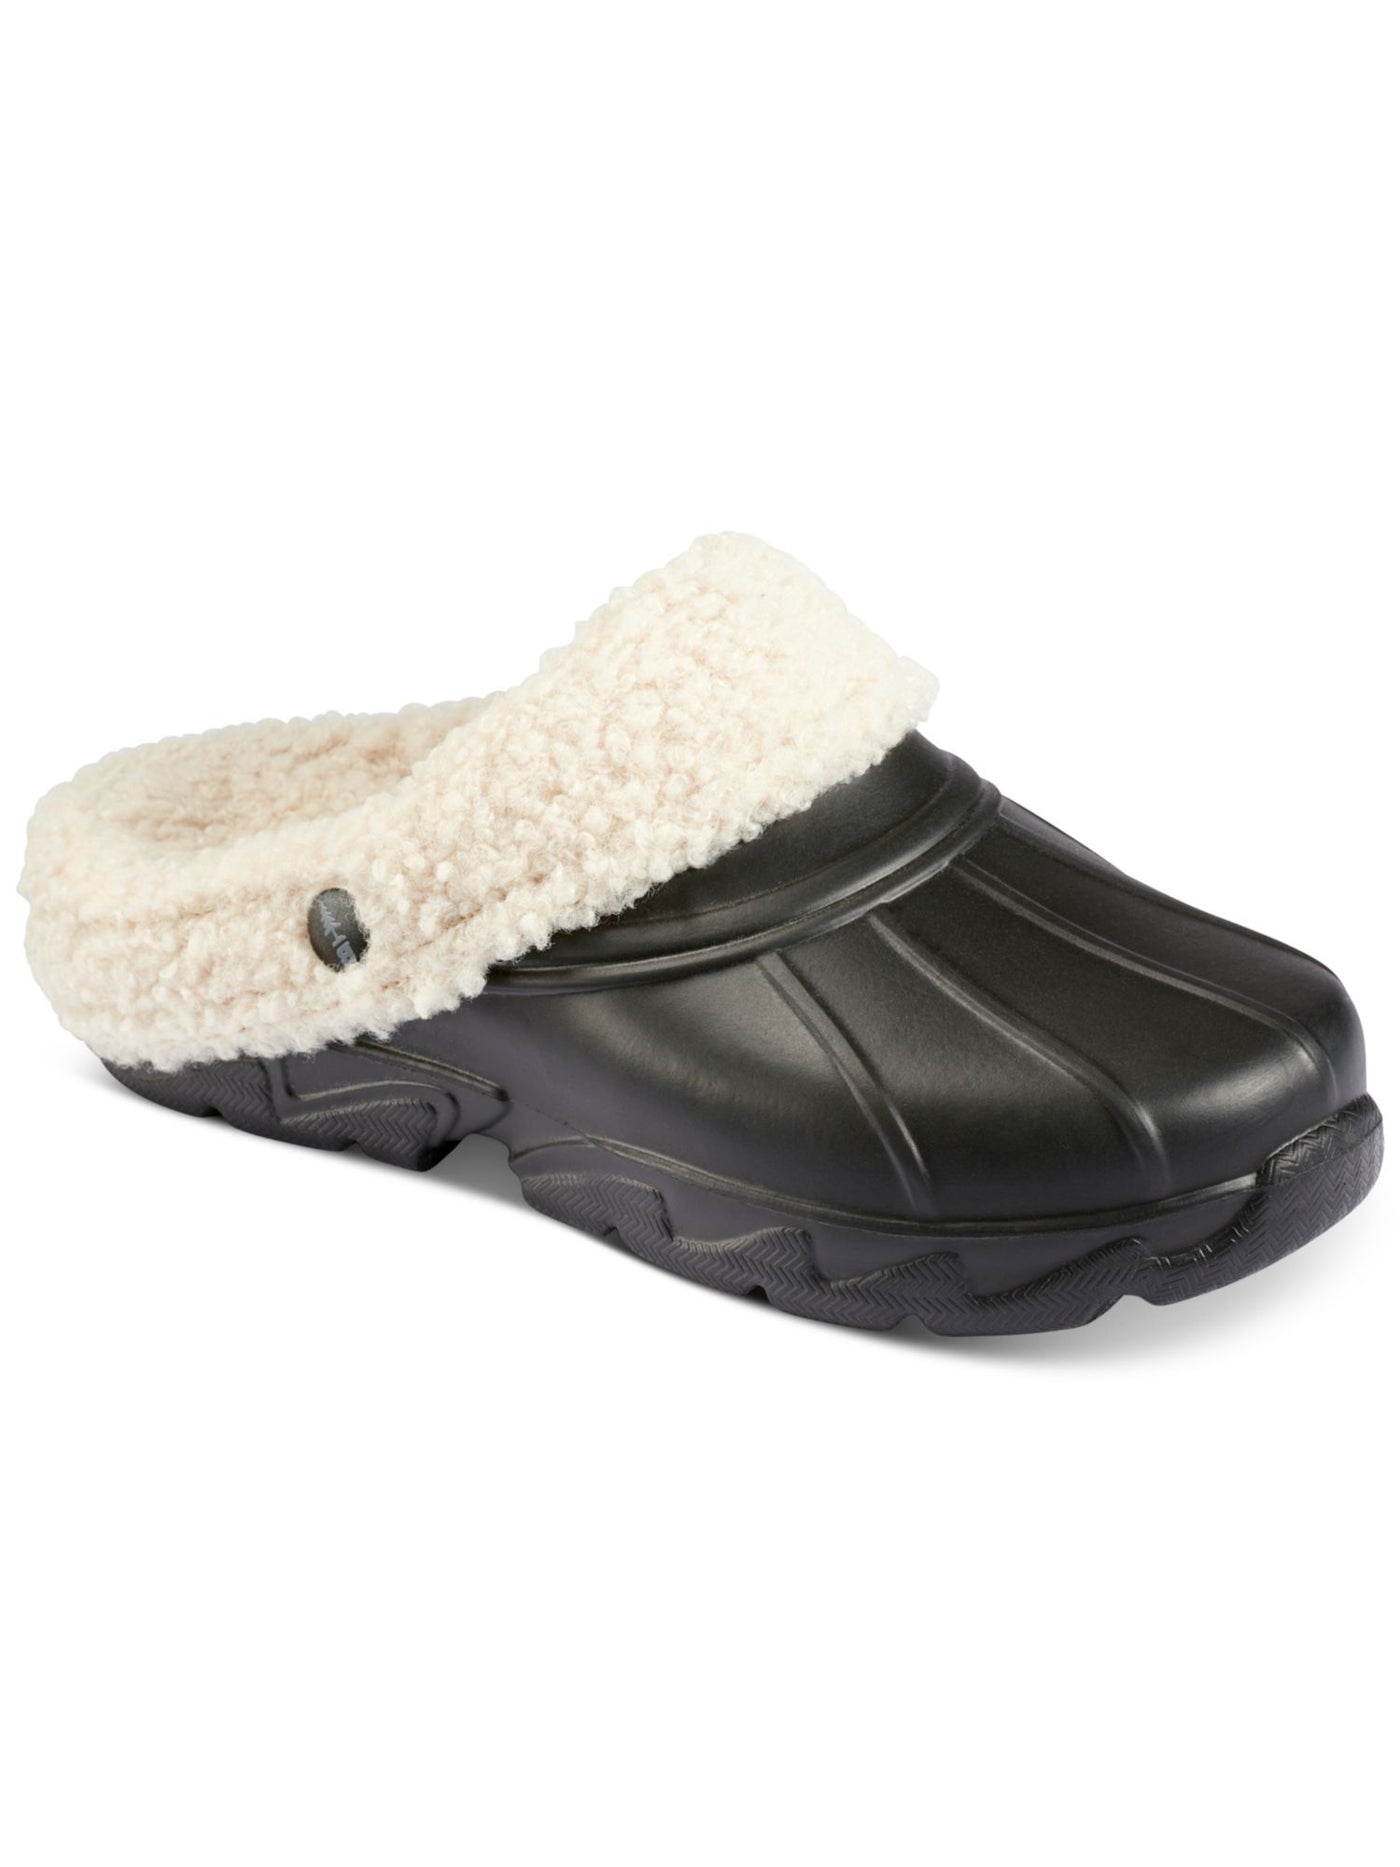 BASS OUTDOOR Womens Black Comfort Field Round Toe Platform Slip On Clogs Shoes 10